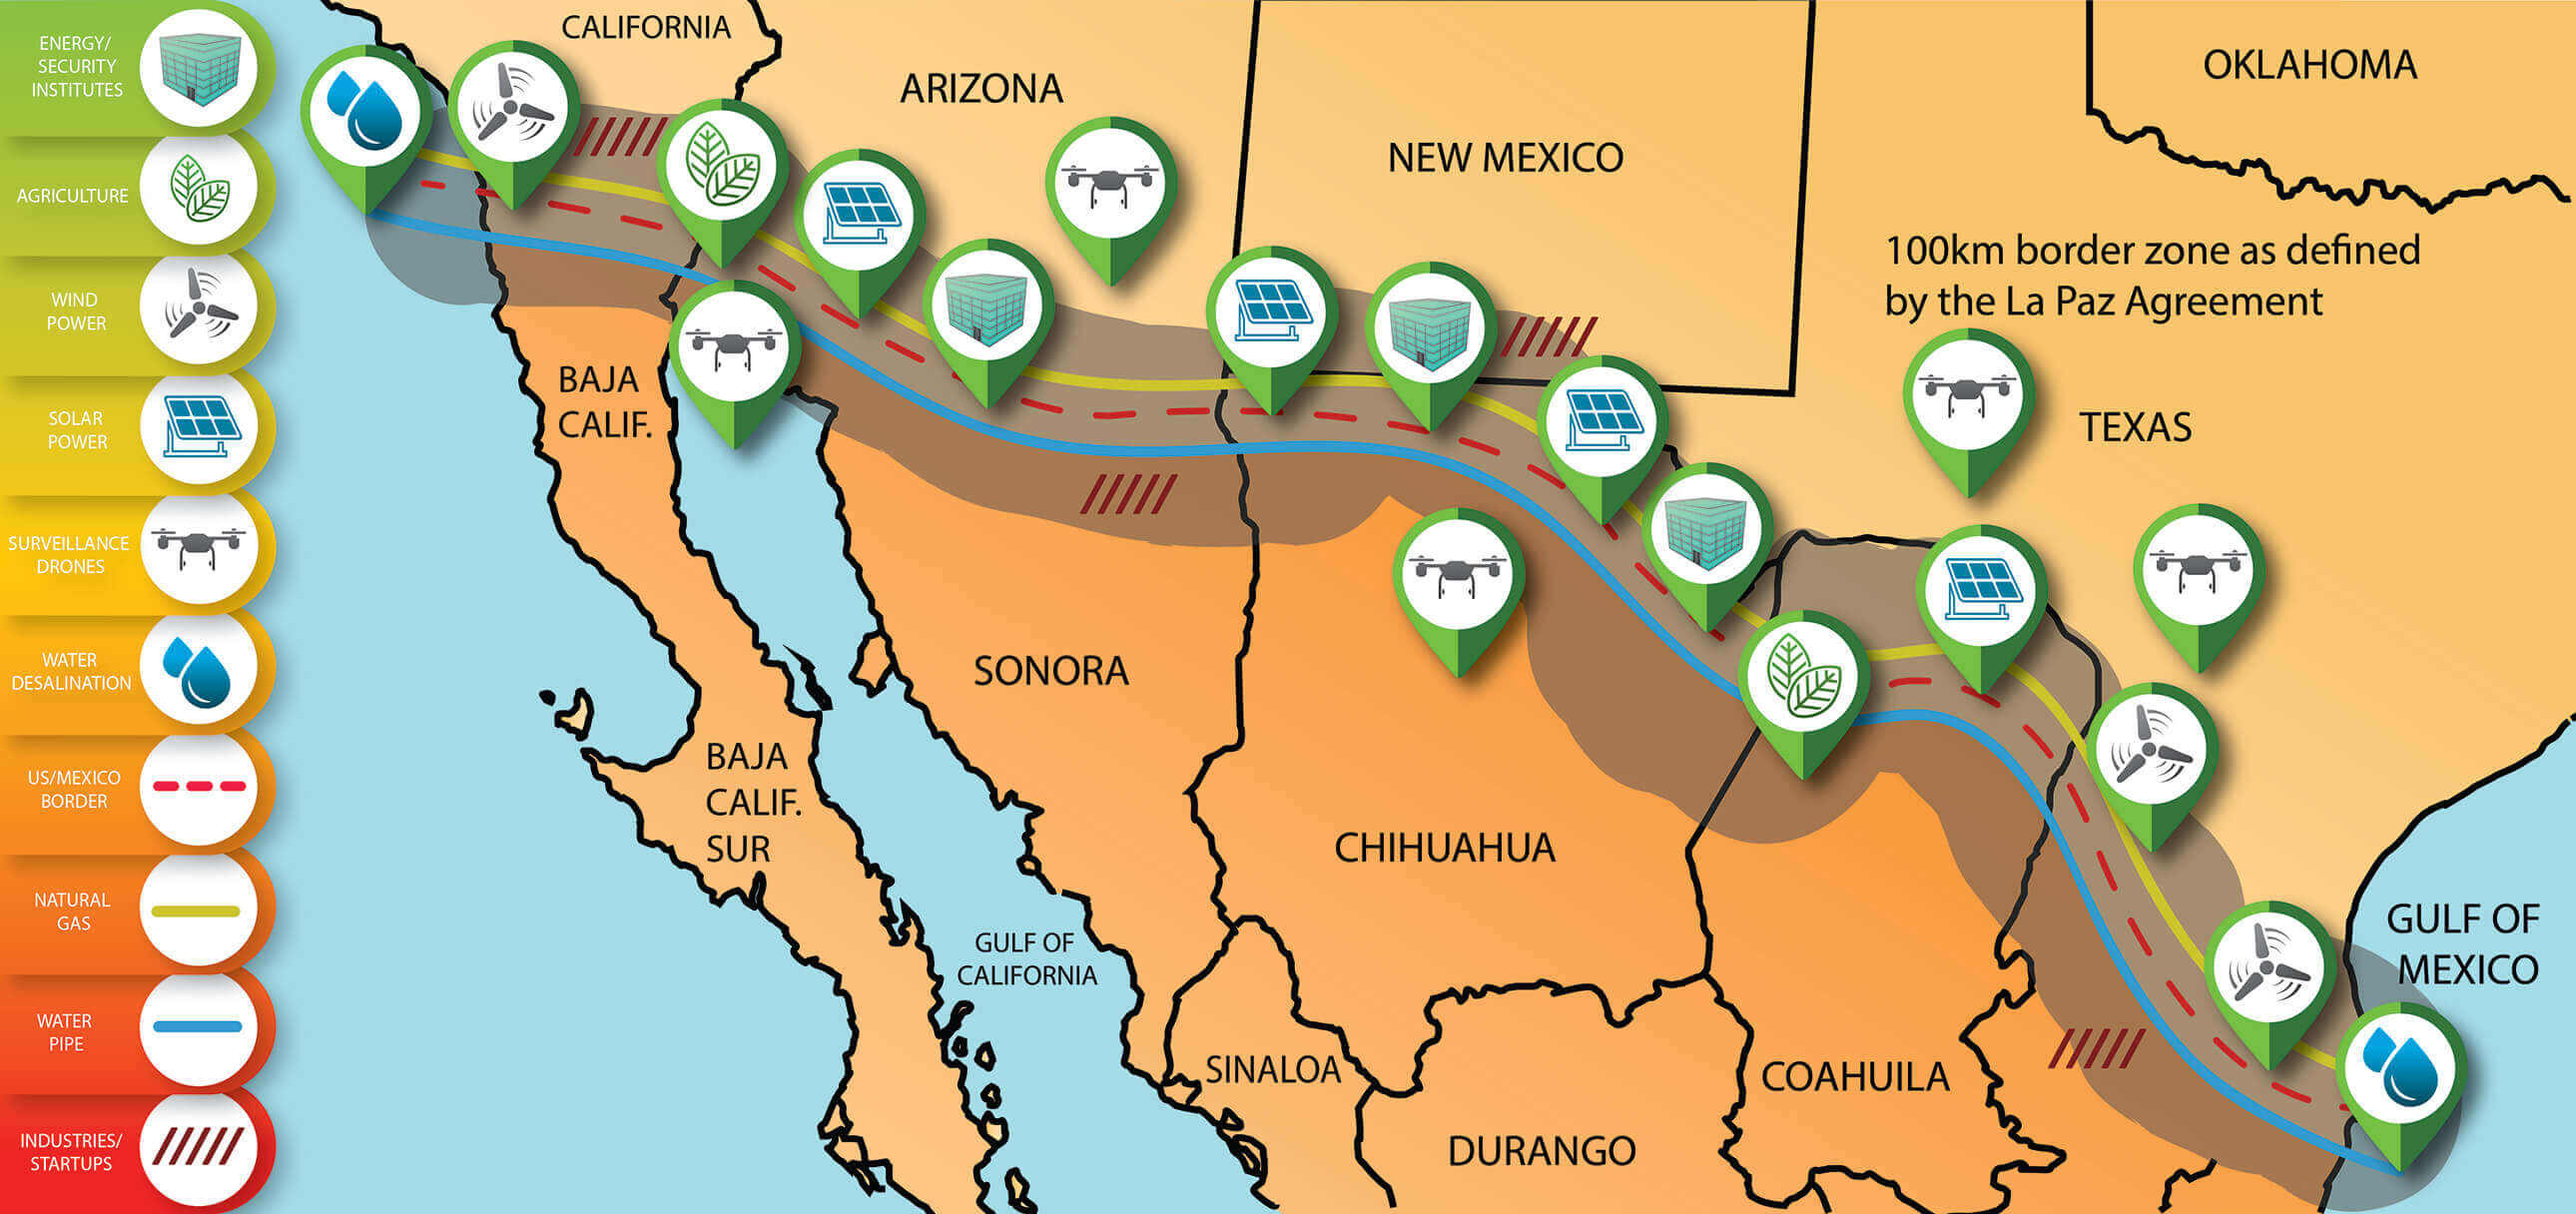 Zone definition. Стена между США И Мексикой на карте. Граница Мексики и США коридор. Граница Мексики и Нью Мексики. Бордер на границе Мексики.